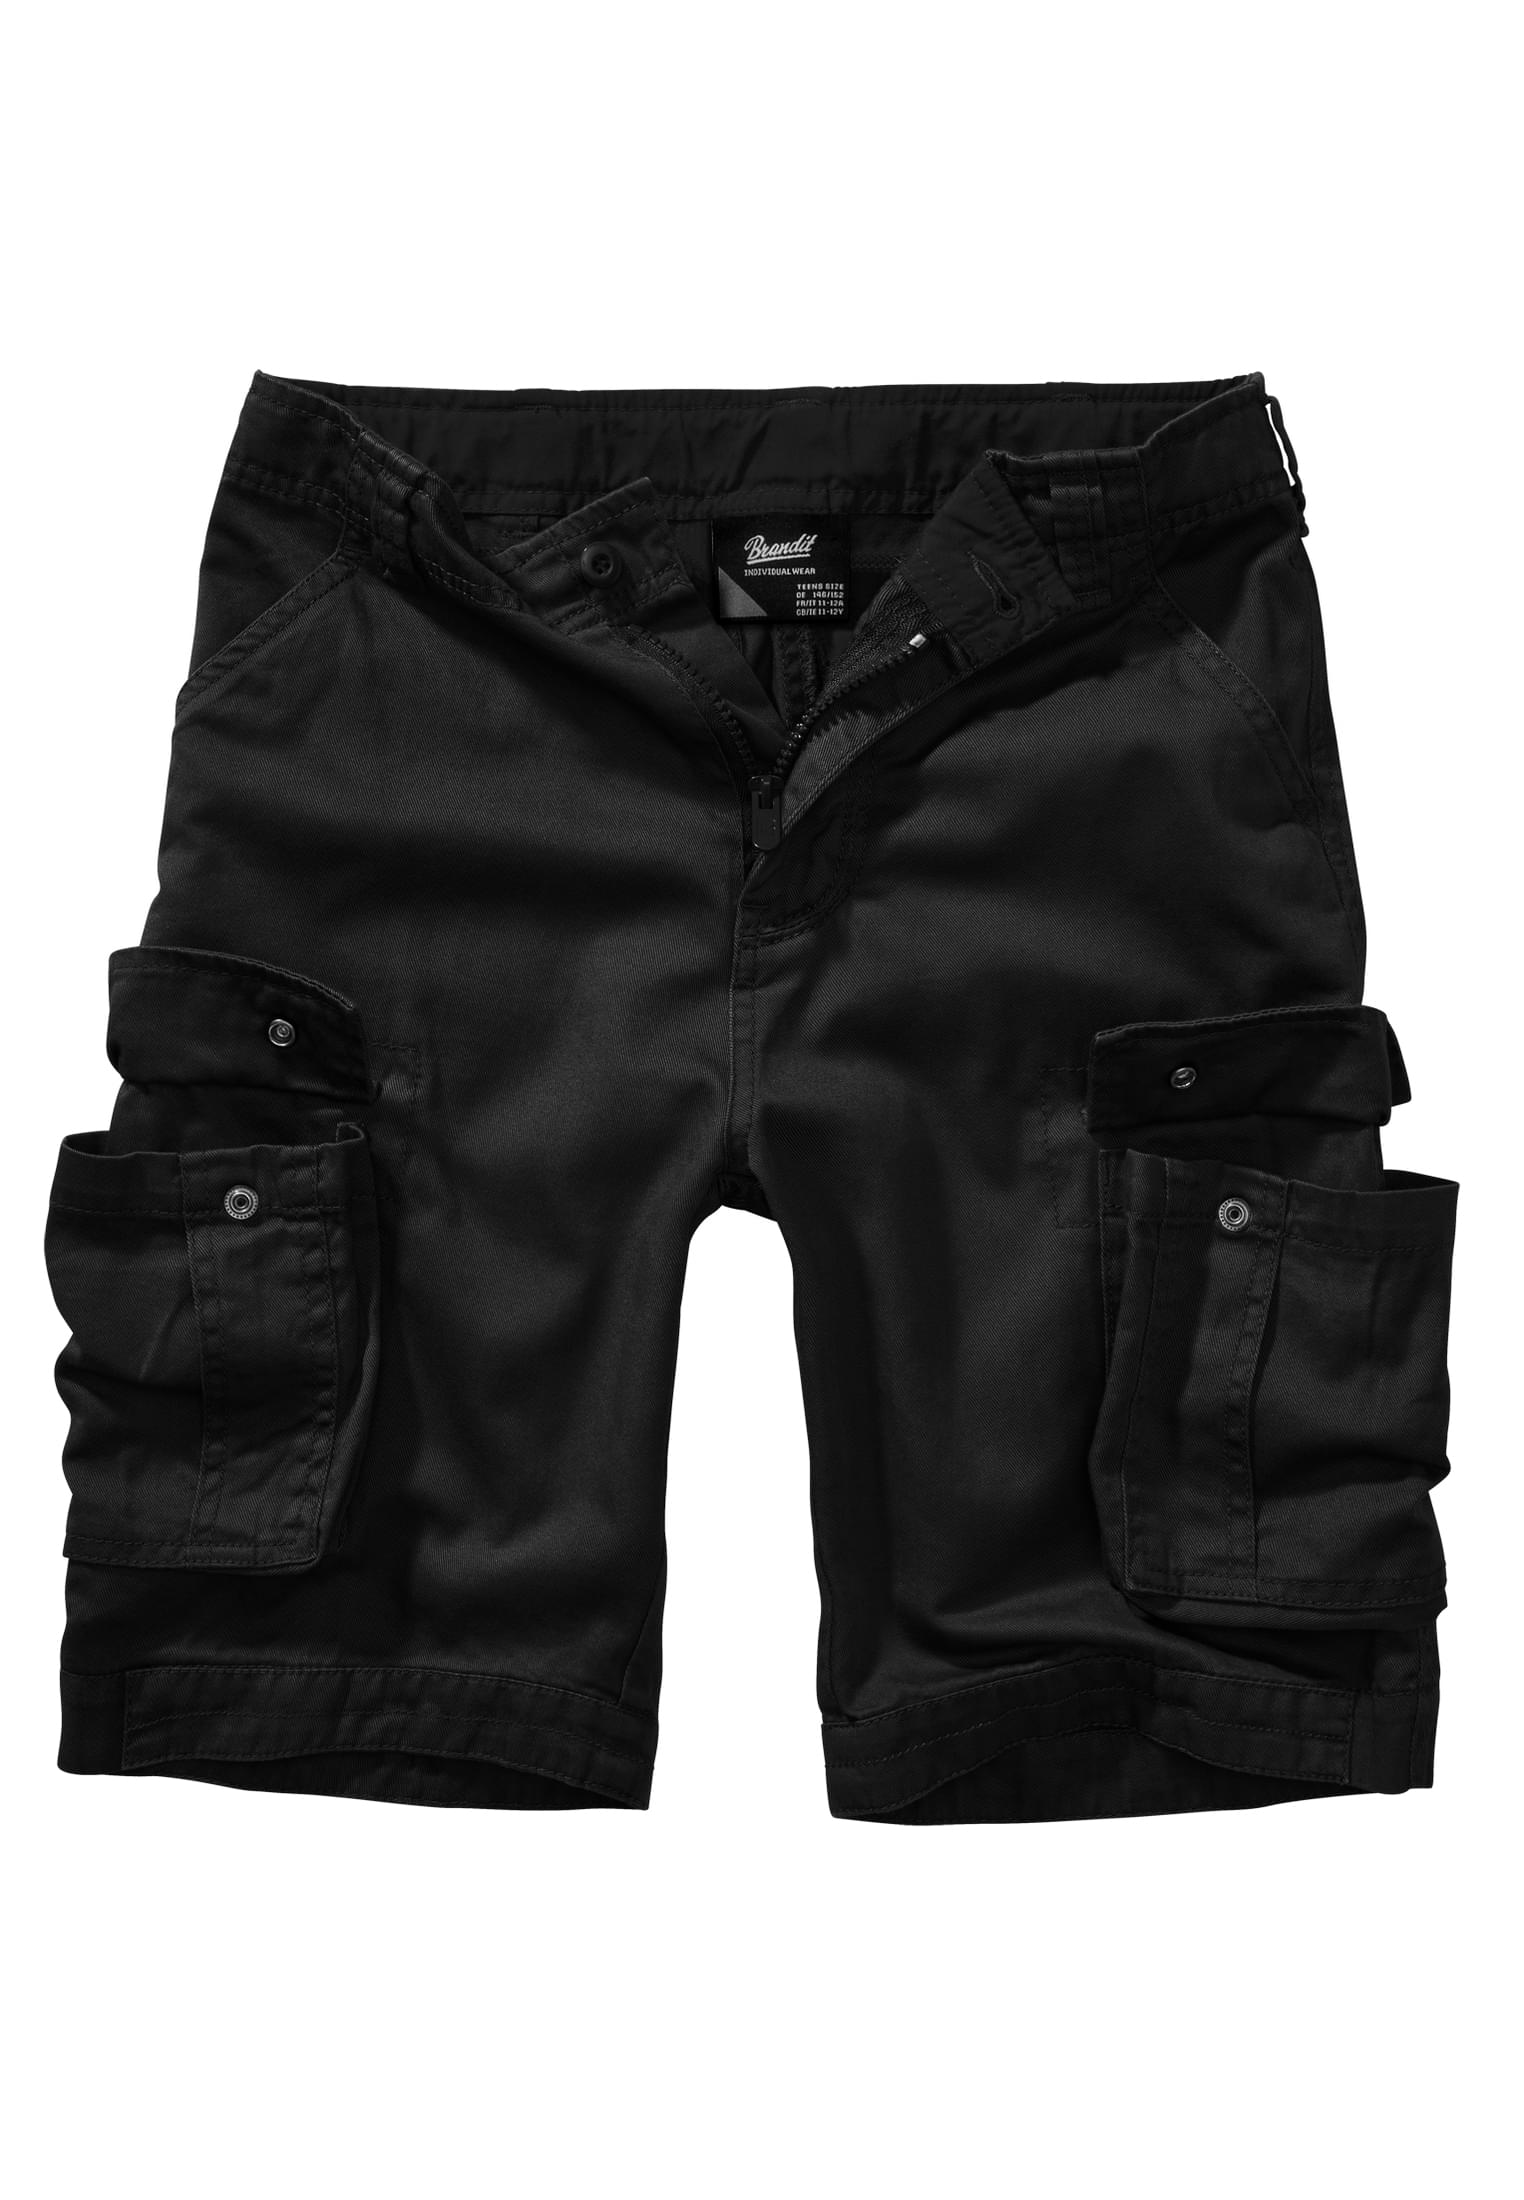 Kinder Kids Urban Legend Shorts in Farbe black